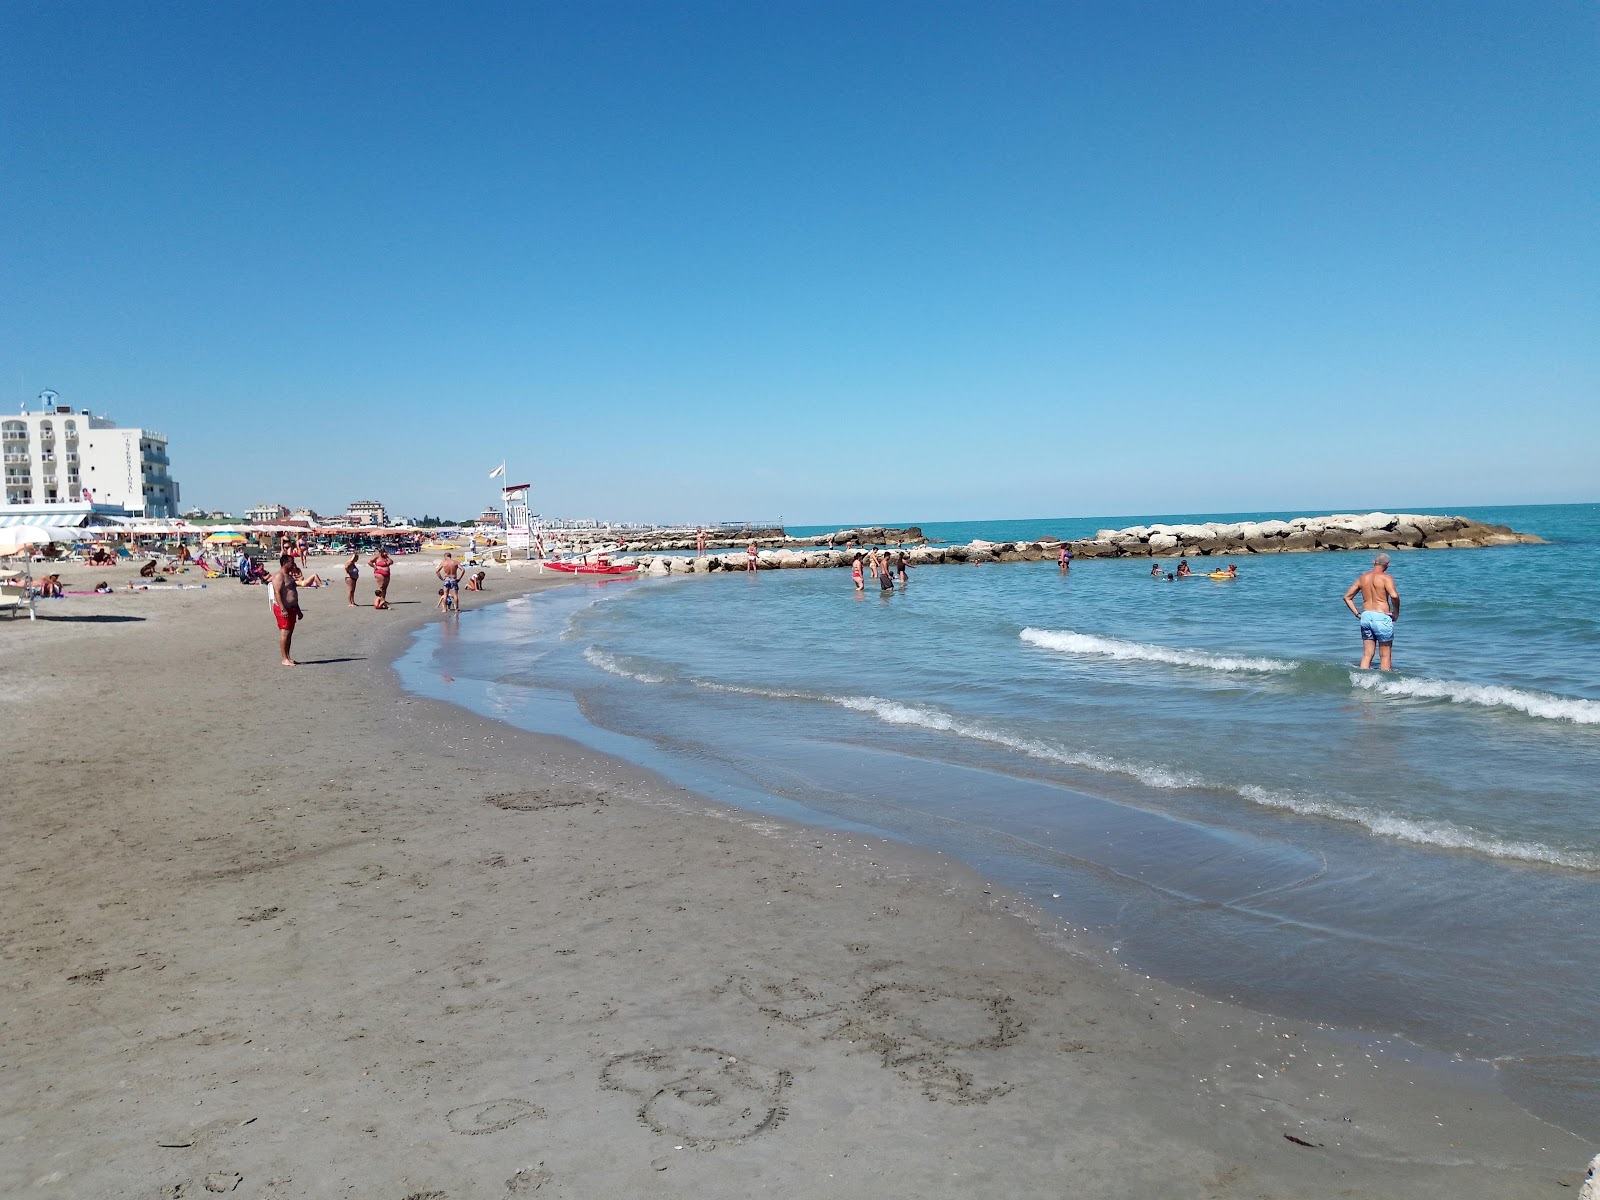 Fotografija Plaža Riviera Romagnola z turkizna voda površino